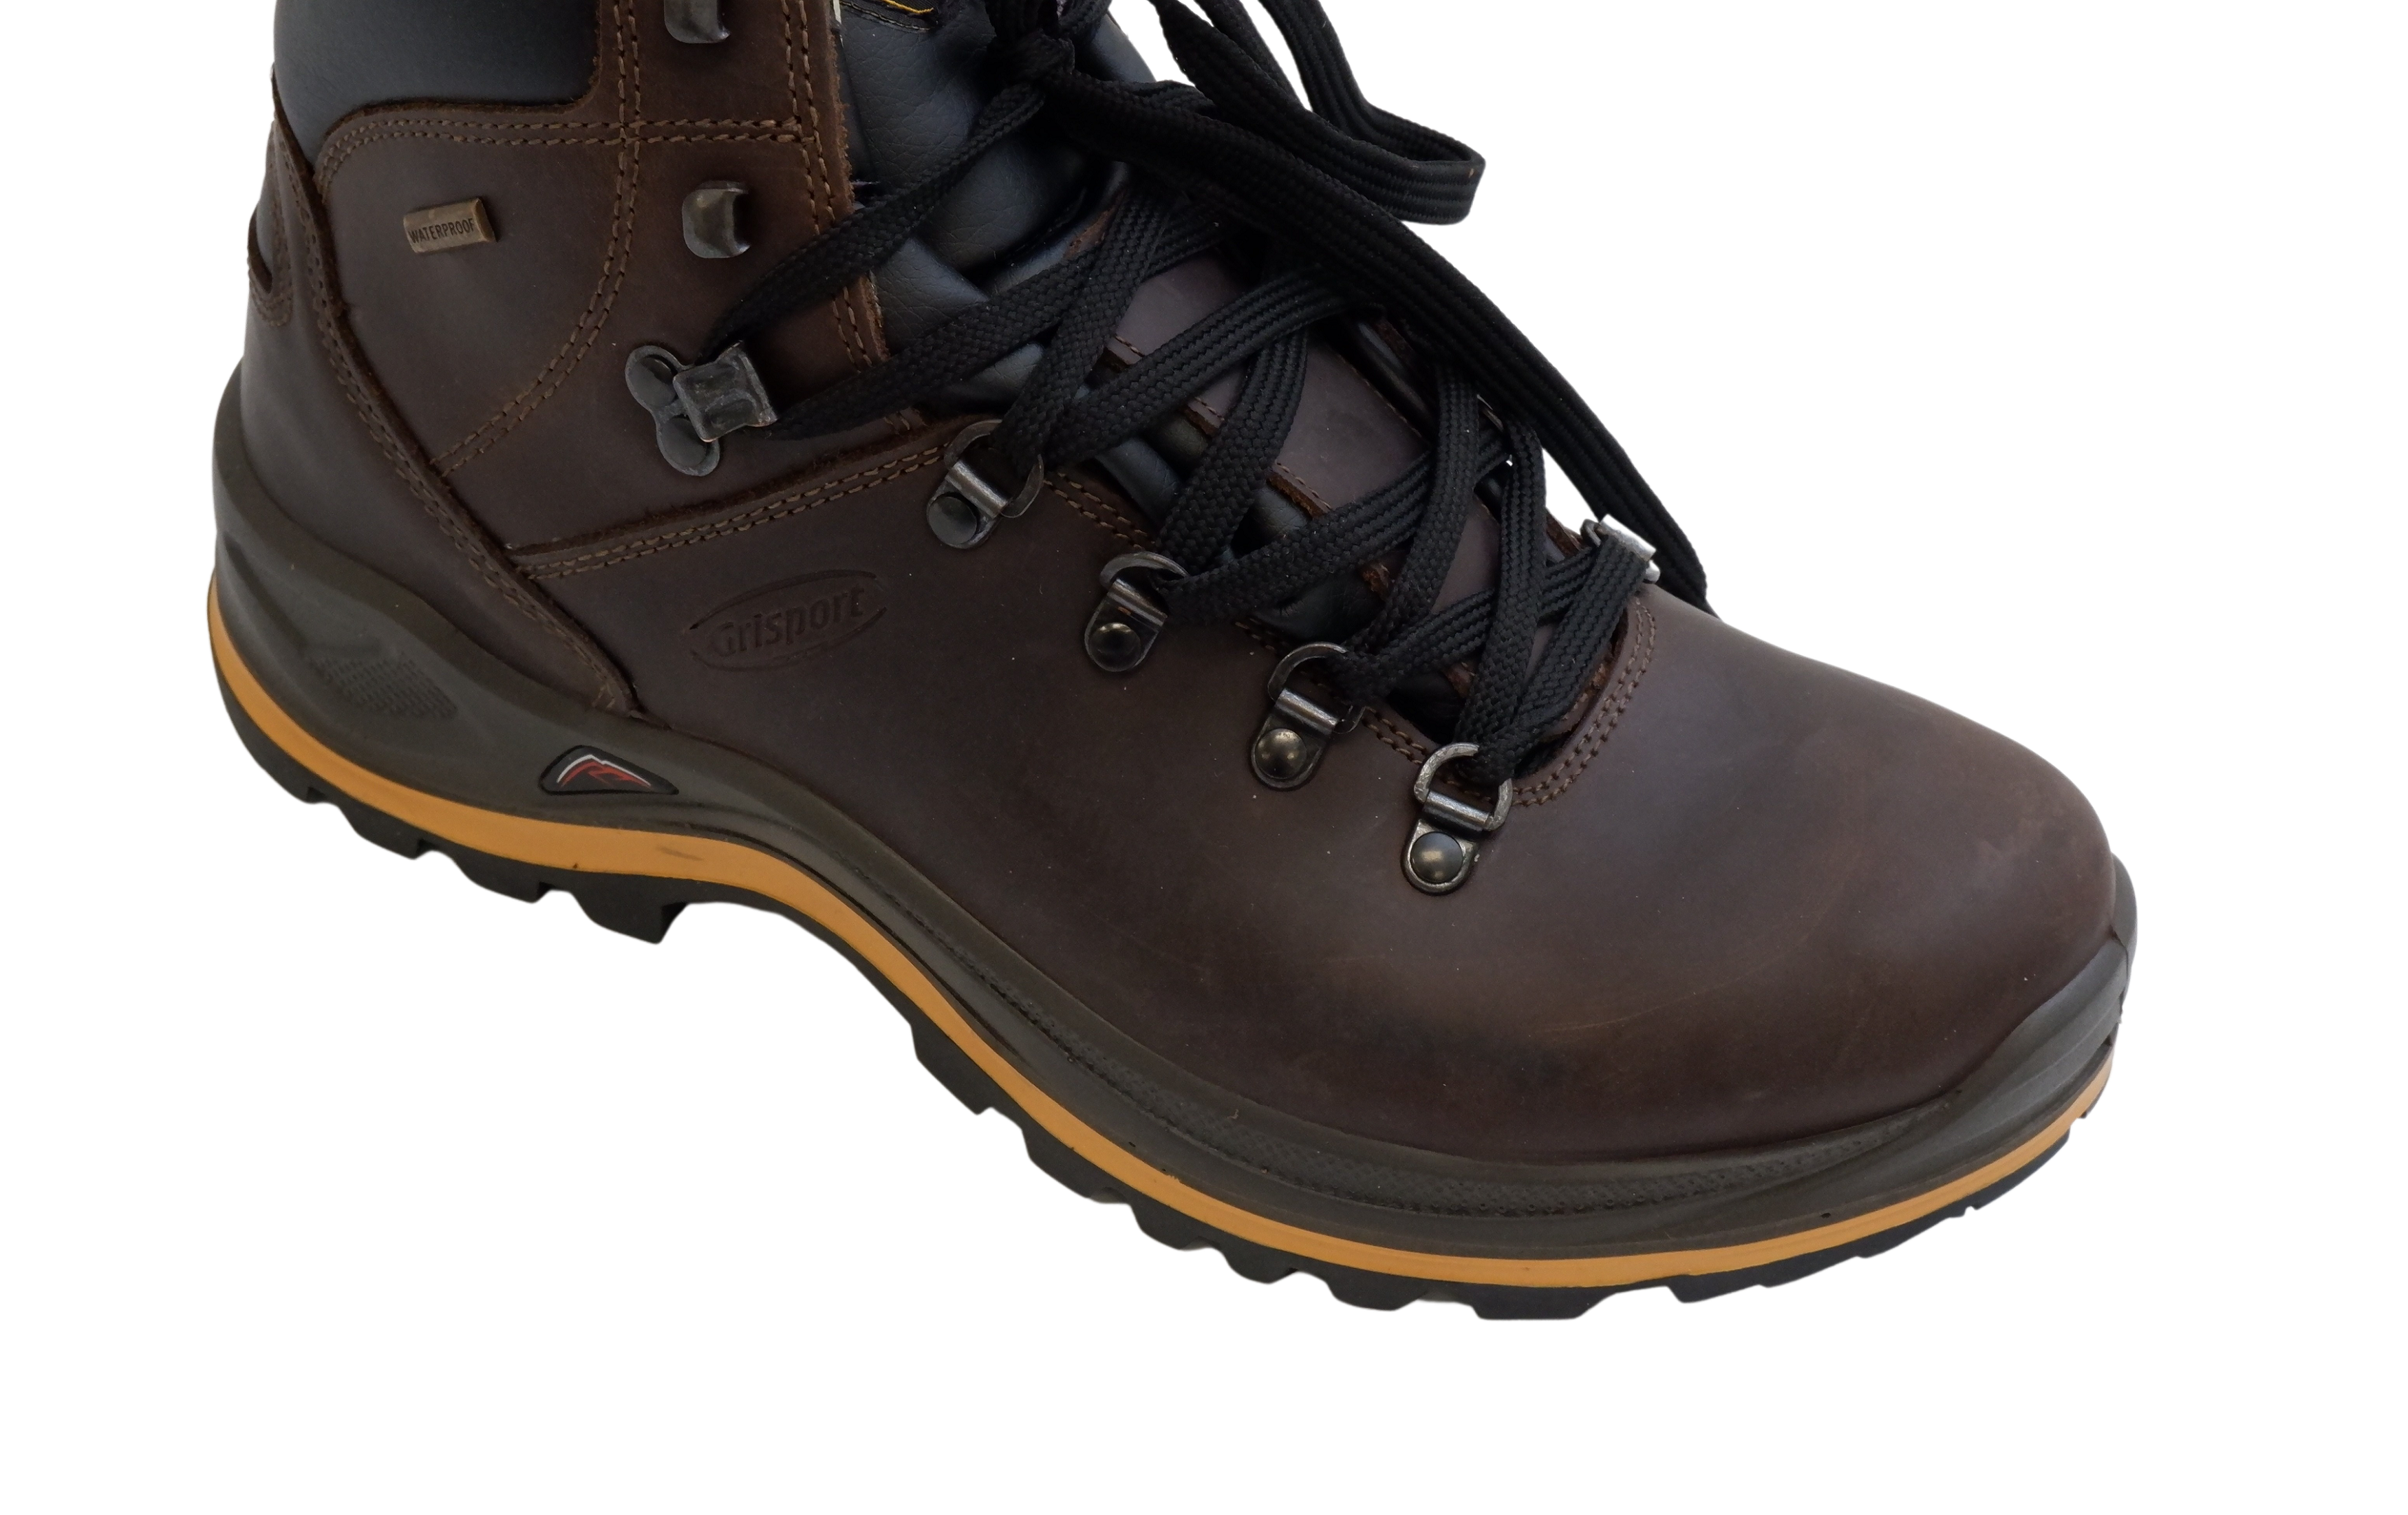 Grisport Men's Hiker Boot Eagle 6" Waterproof with Vibram Sole Sizes 7-14